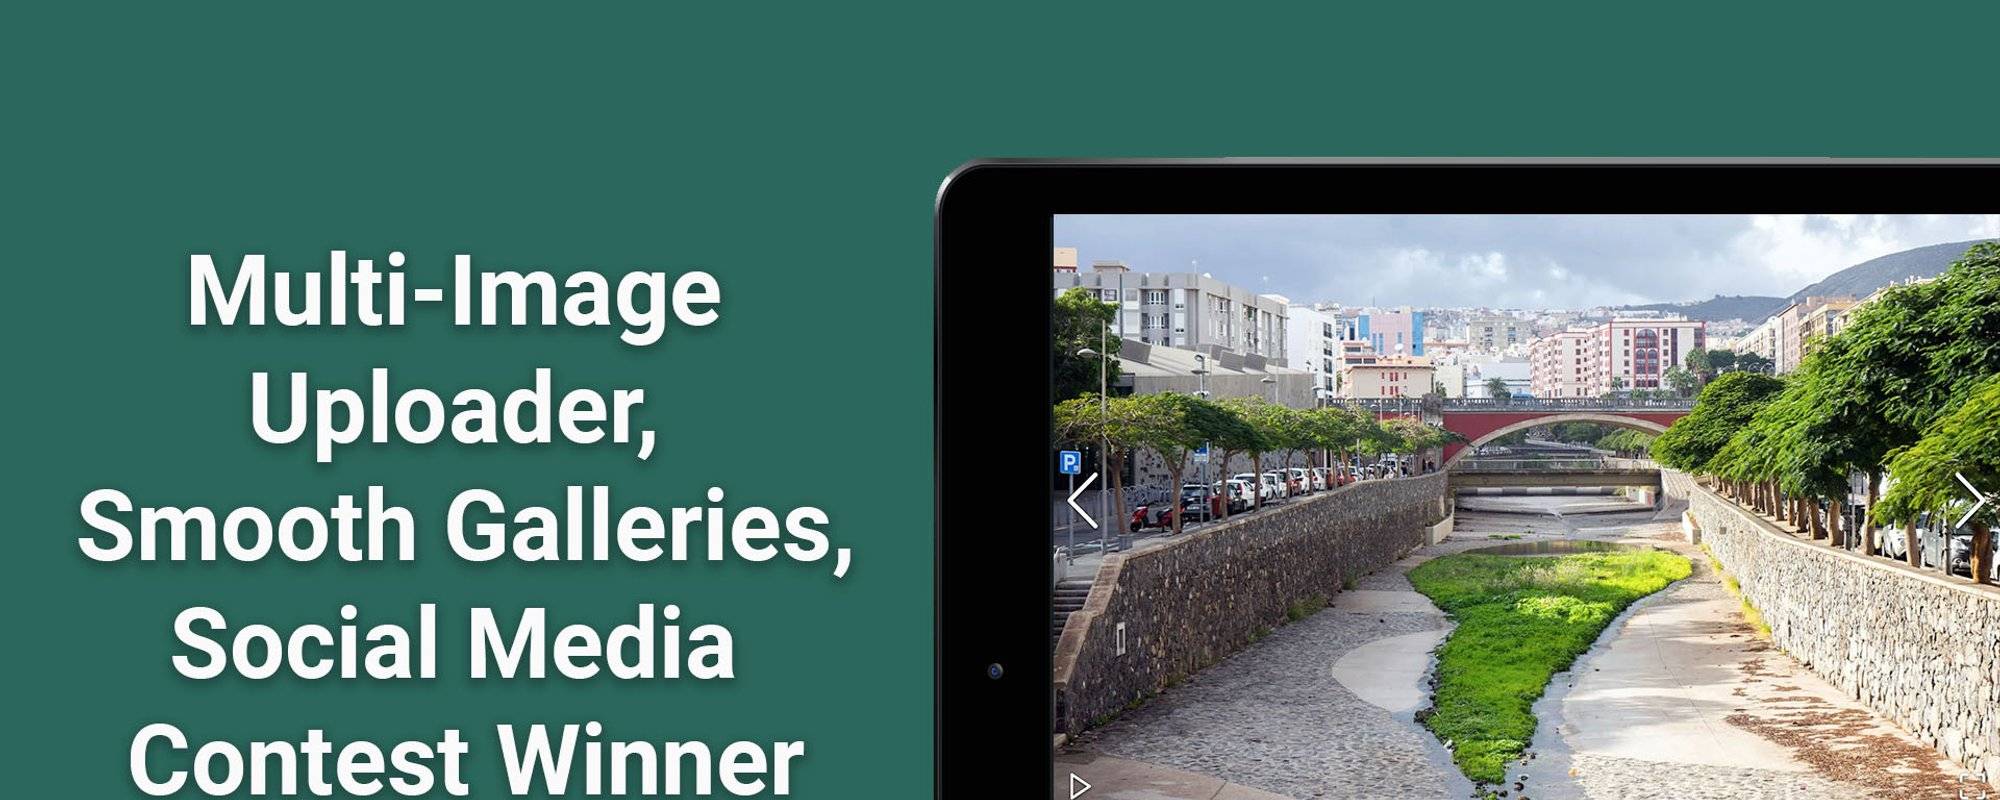 Multi-Image Uploader, Smooth Galleries, Social Media Contest Winner